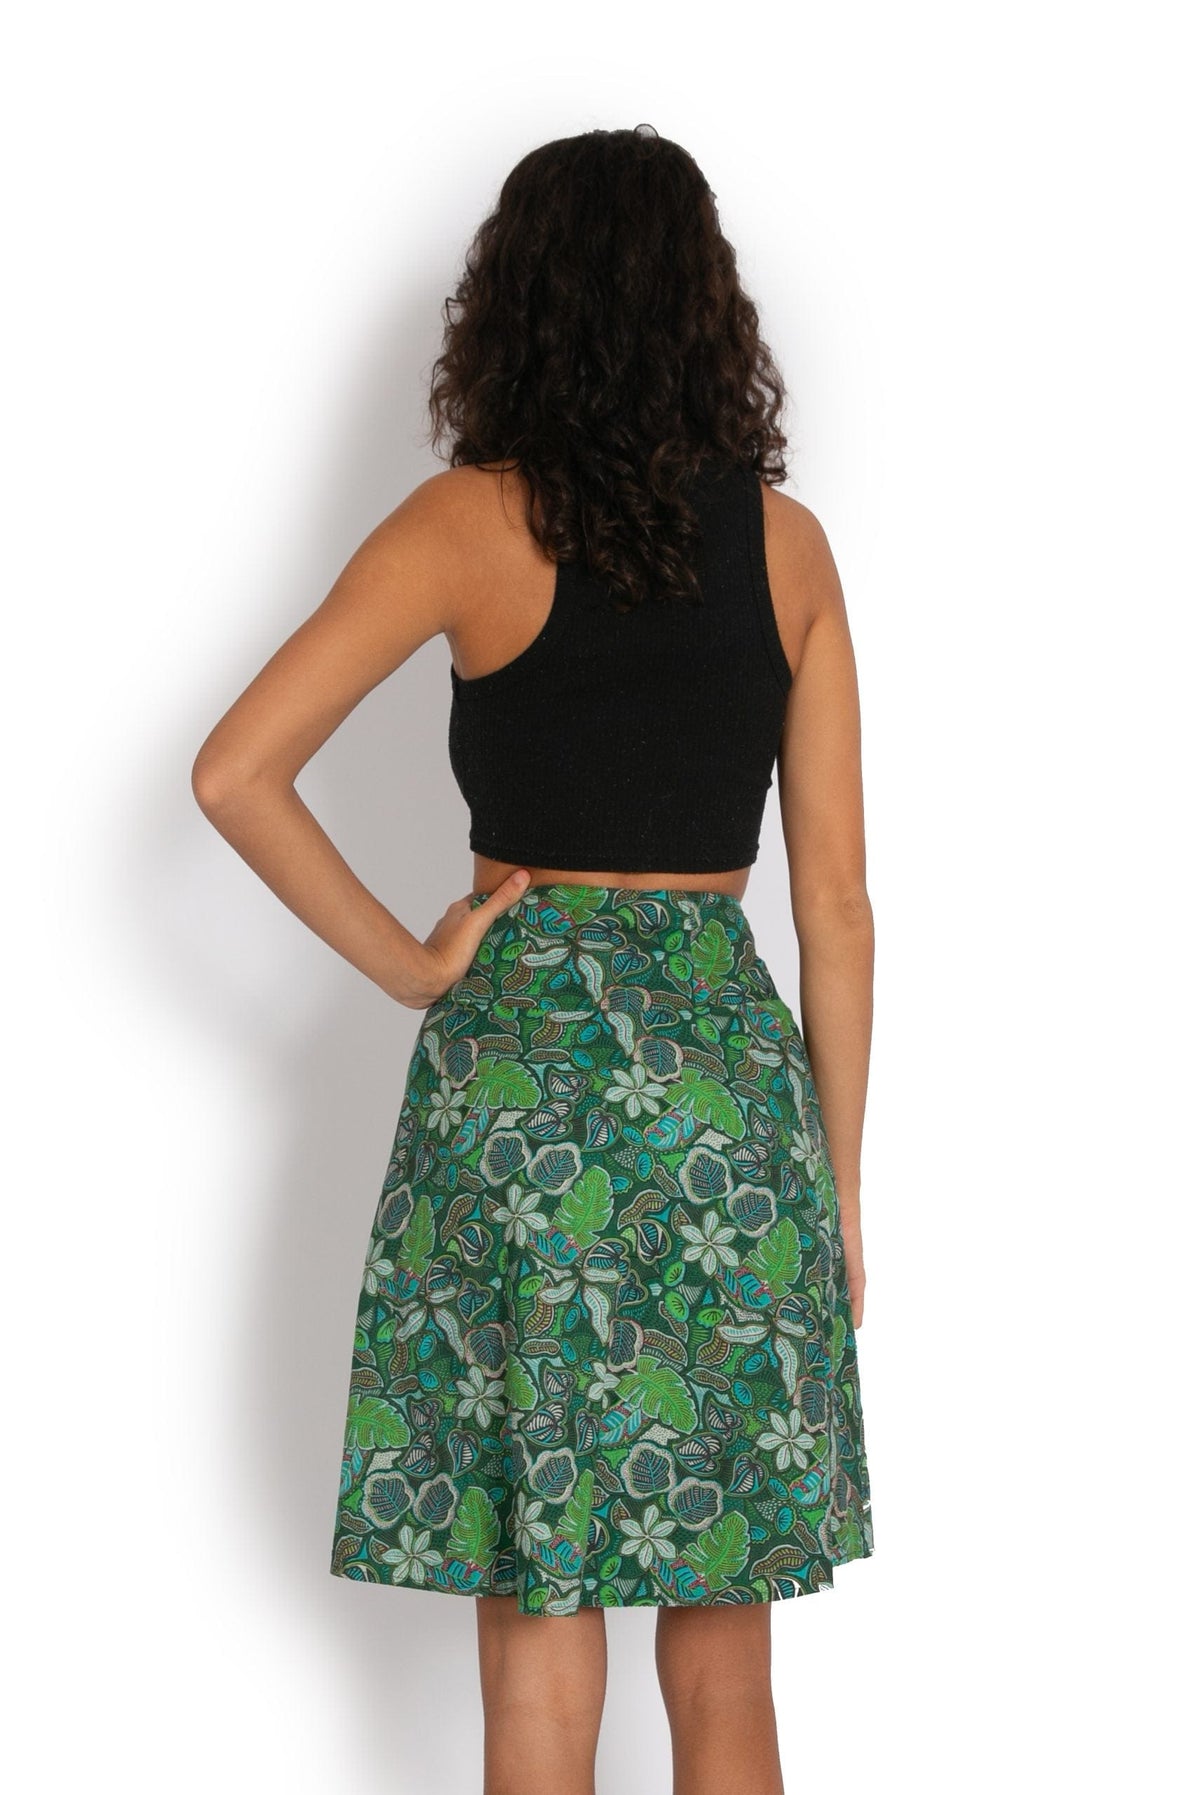 Camelon Skirt - Blue Stardust / Jungle Green - OM Designs - Splash Swimwear  - June23, new arrivals, new clothing, new womens, OM Designs, skirts - Splash Swimwear 